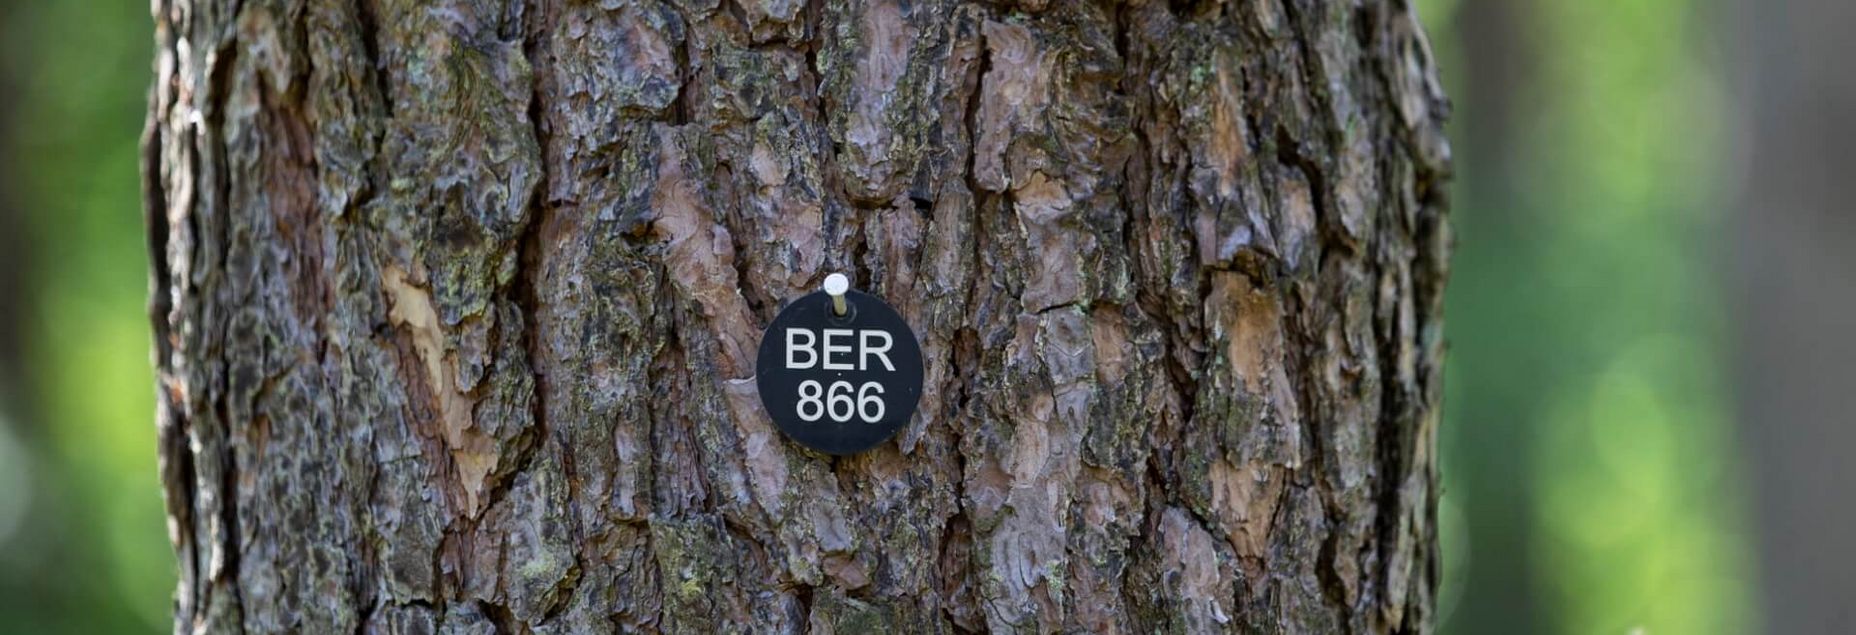 Baum BER 866 - Plakette